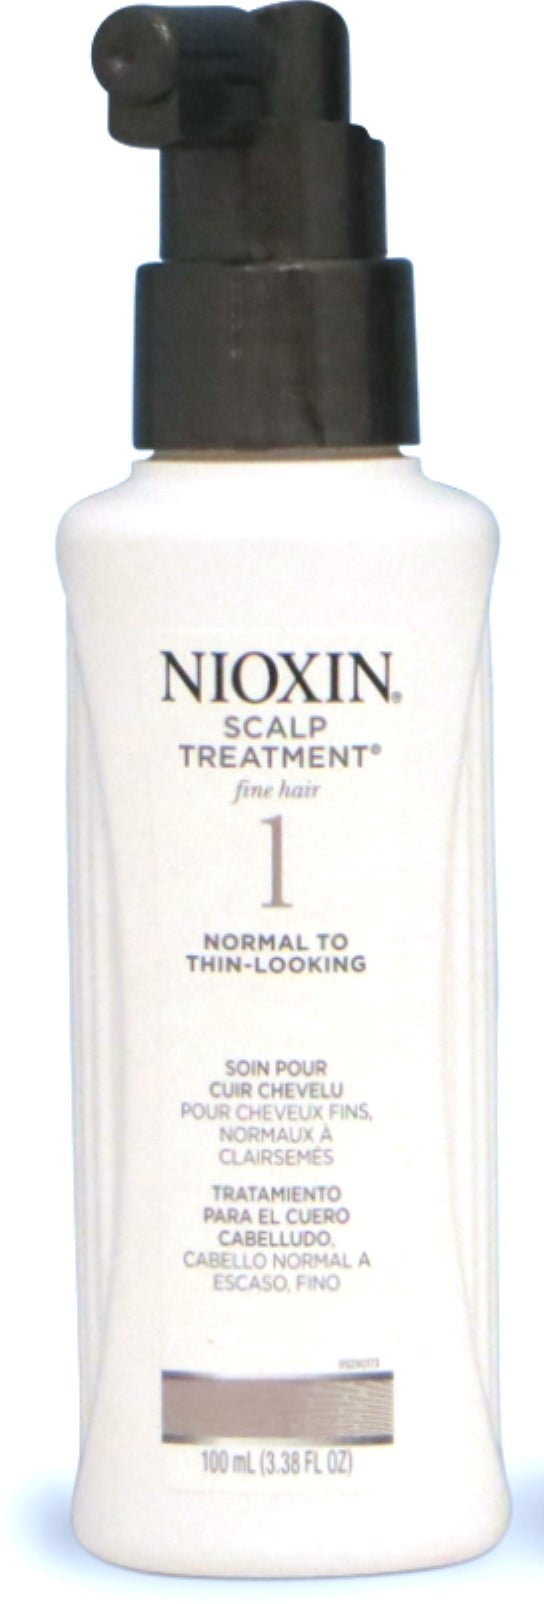 Nioxin Scalp Treatment #1, 3.4 oz (Pack of 2) - Walmart.com